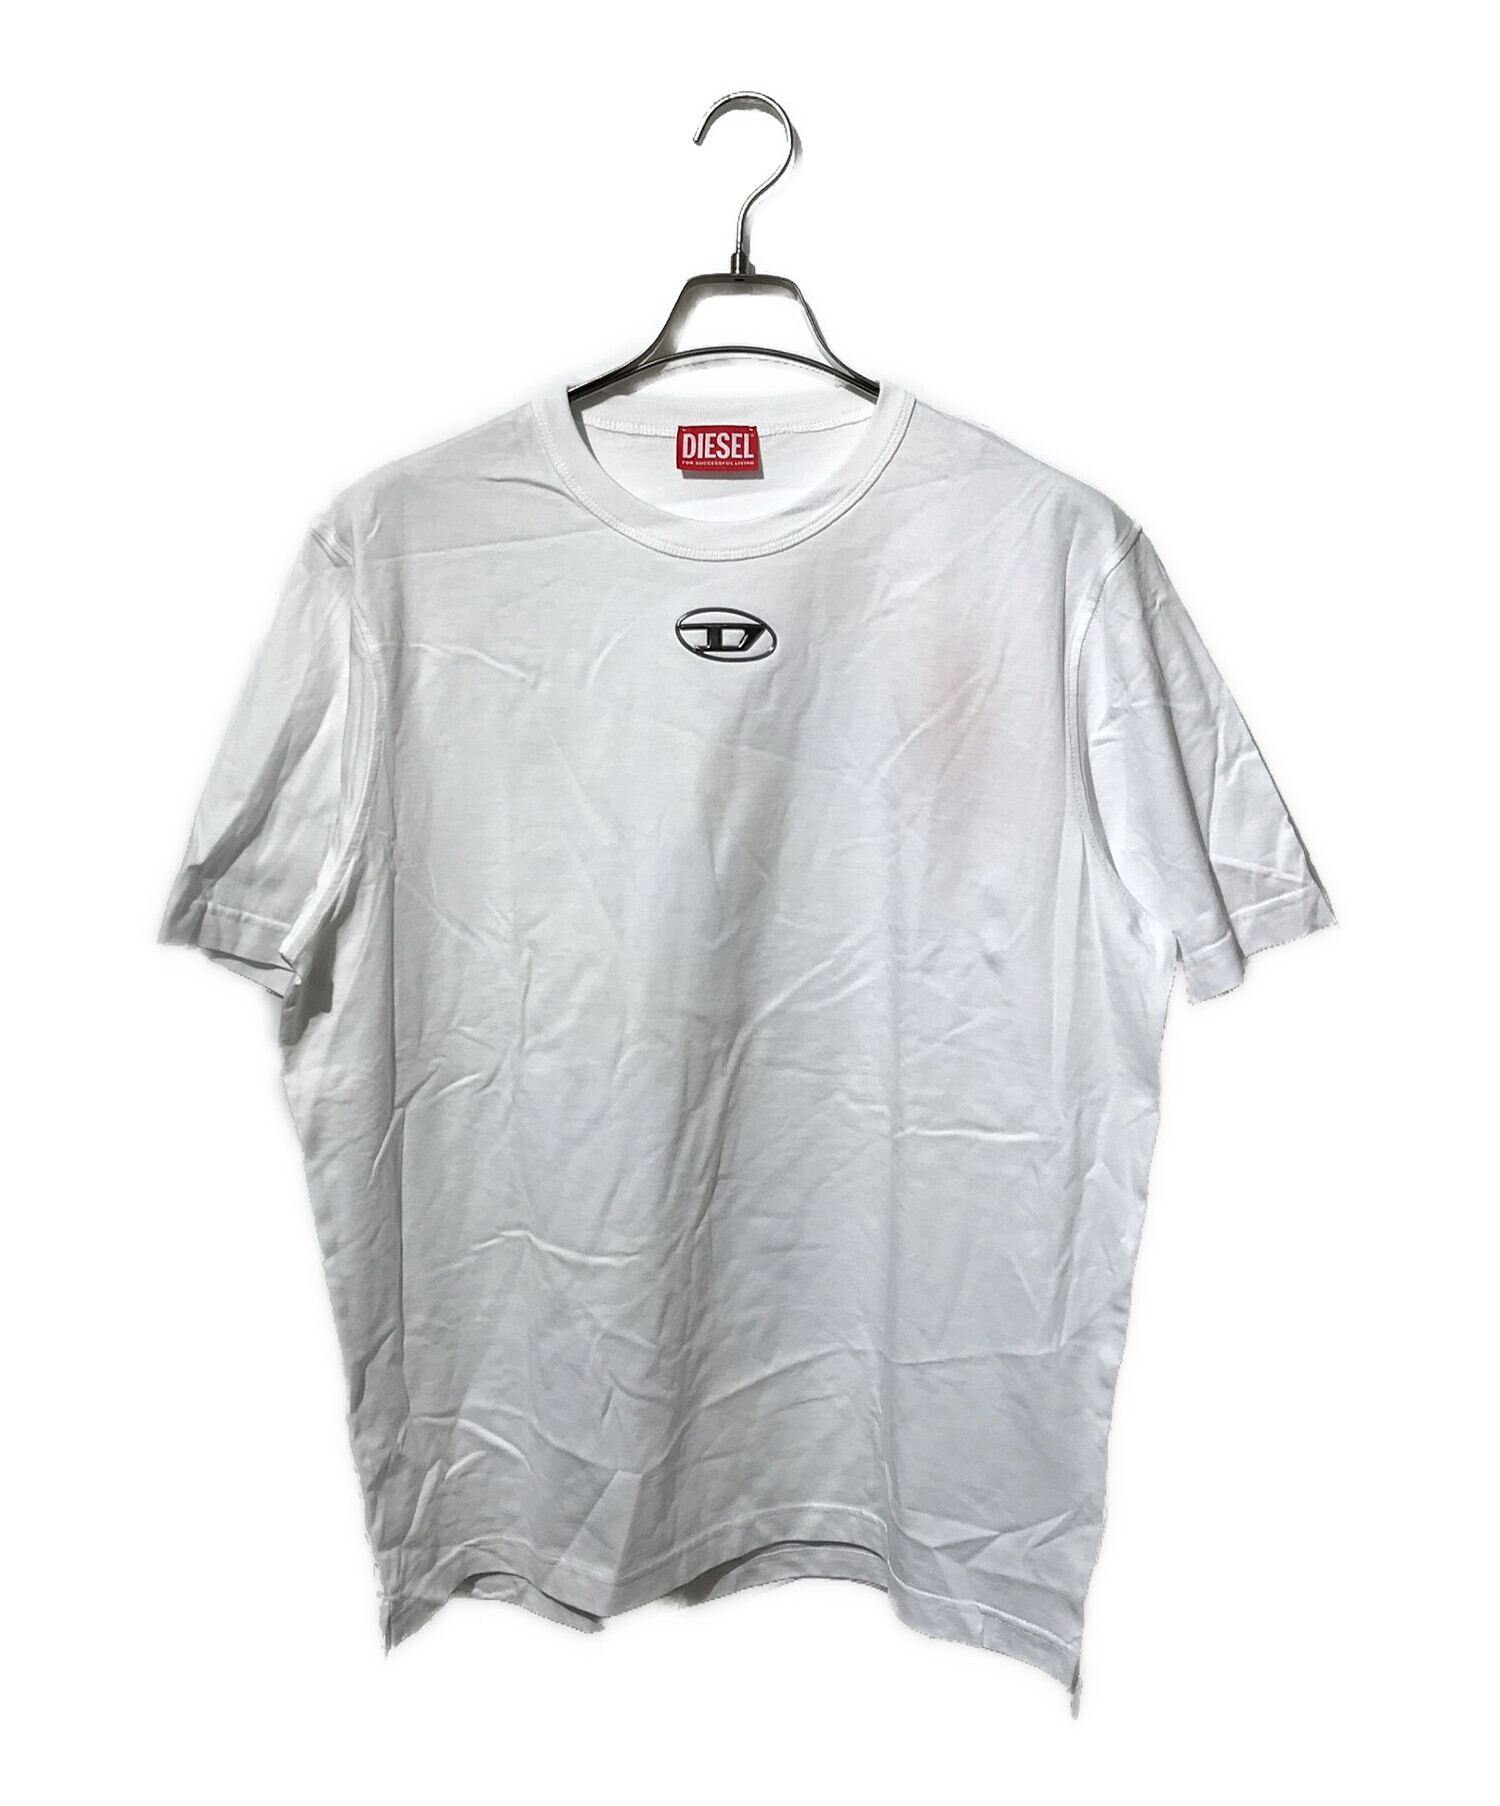 DIESEL (ディーゼル) メタルロゴtシャツ ホワイト サイズ:L 未使用品